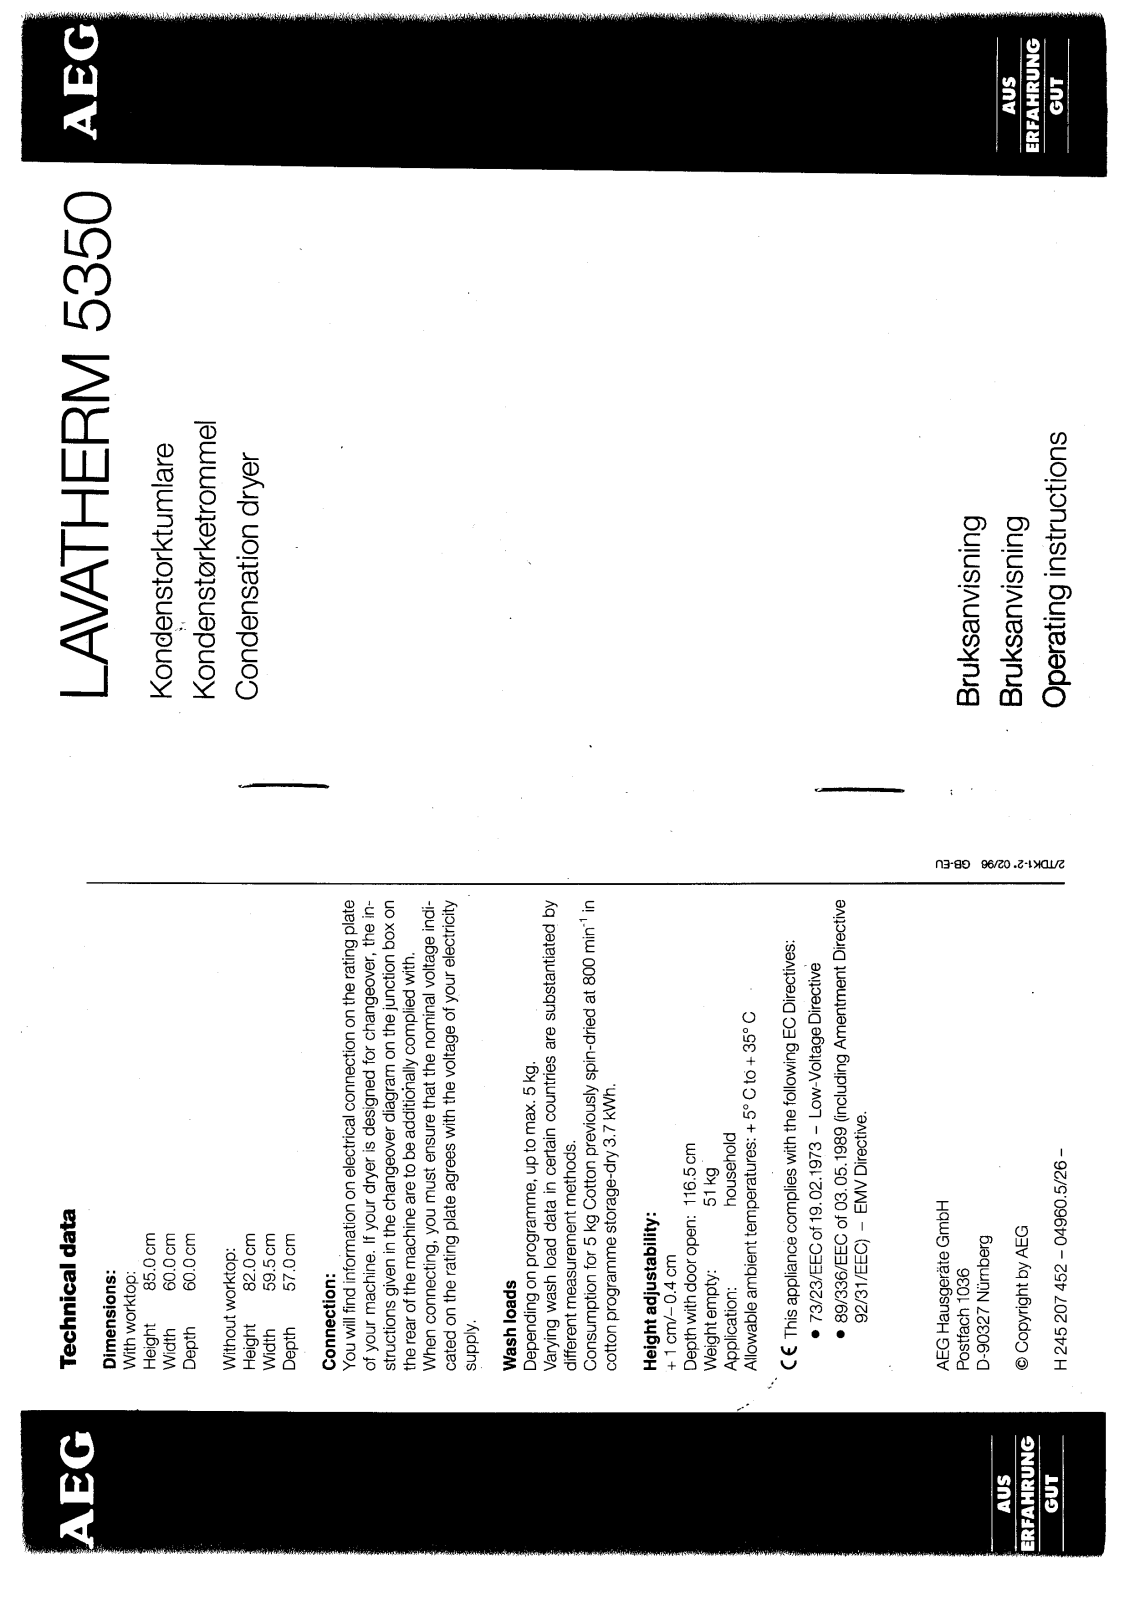 AEG LAVATHERM 5350 User Manual